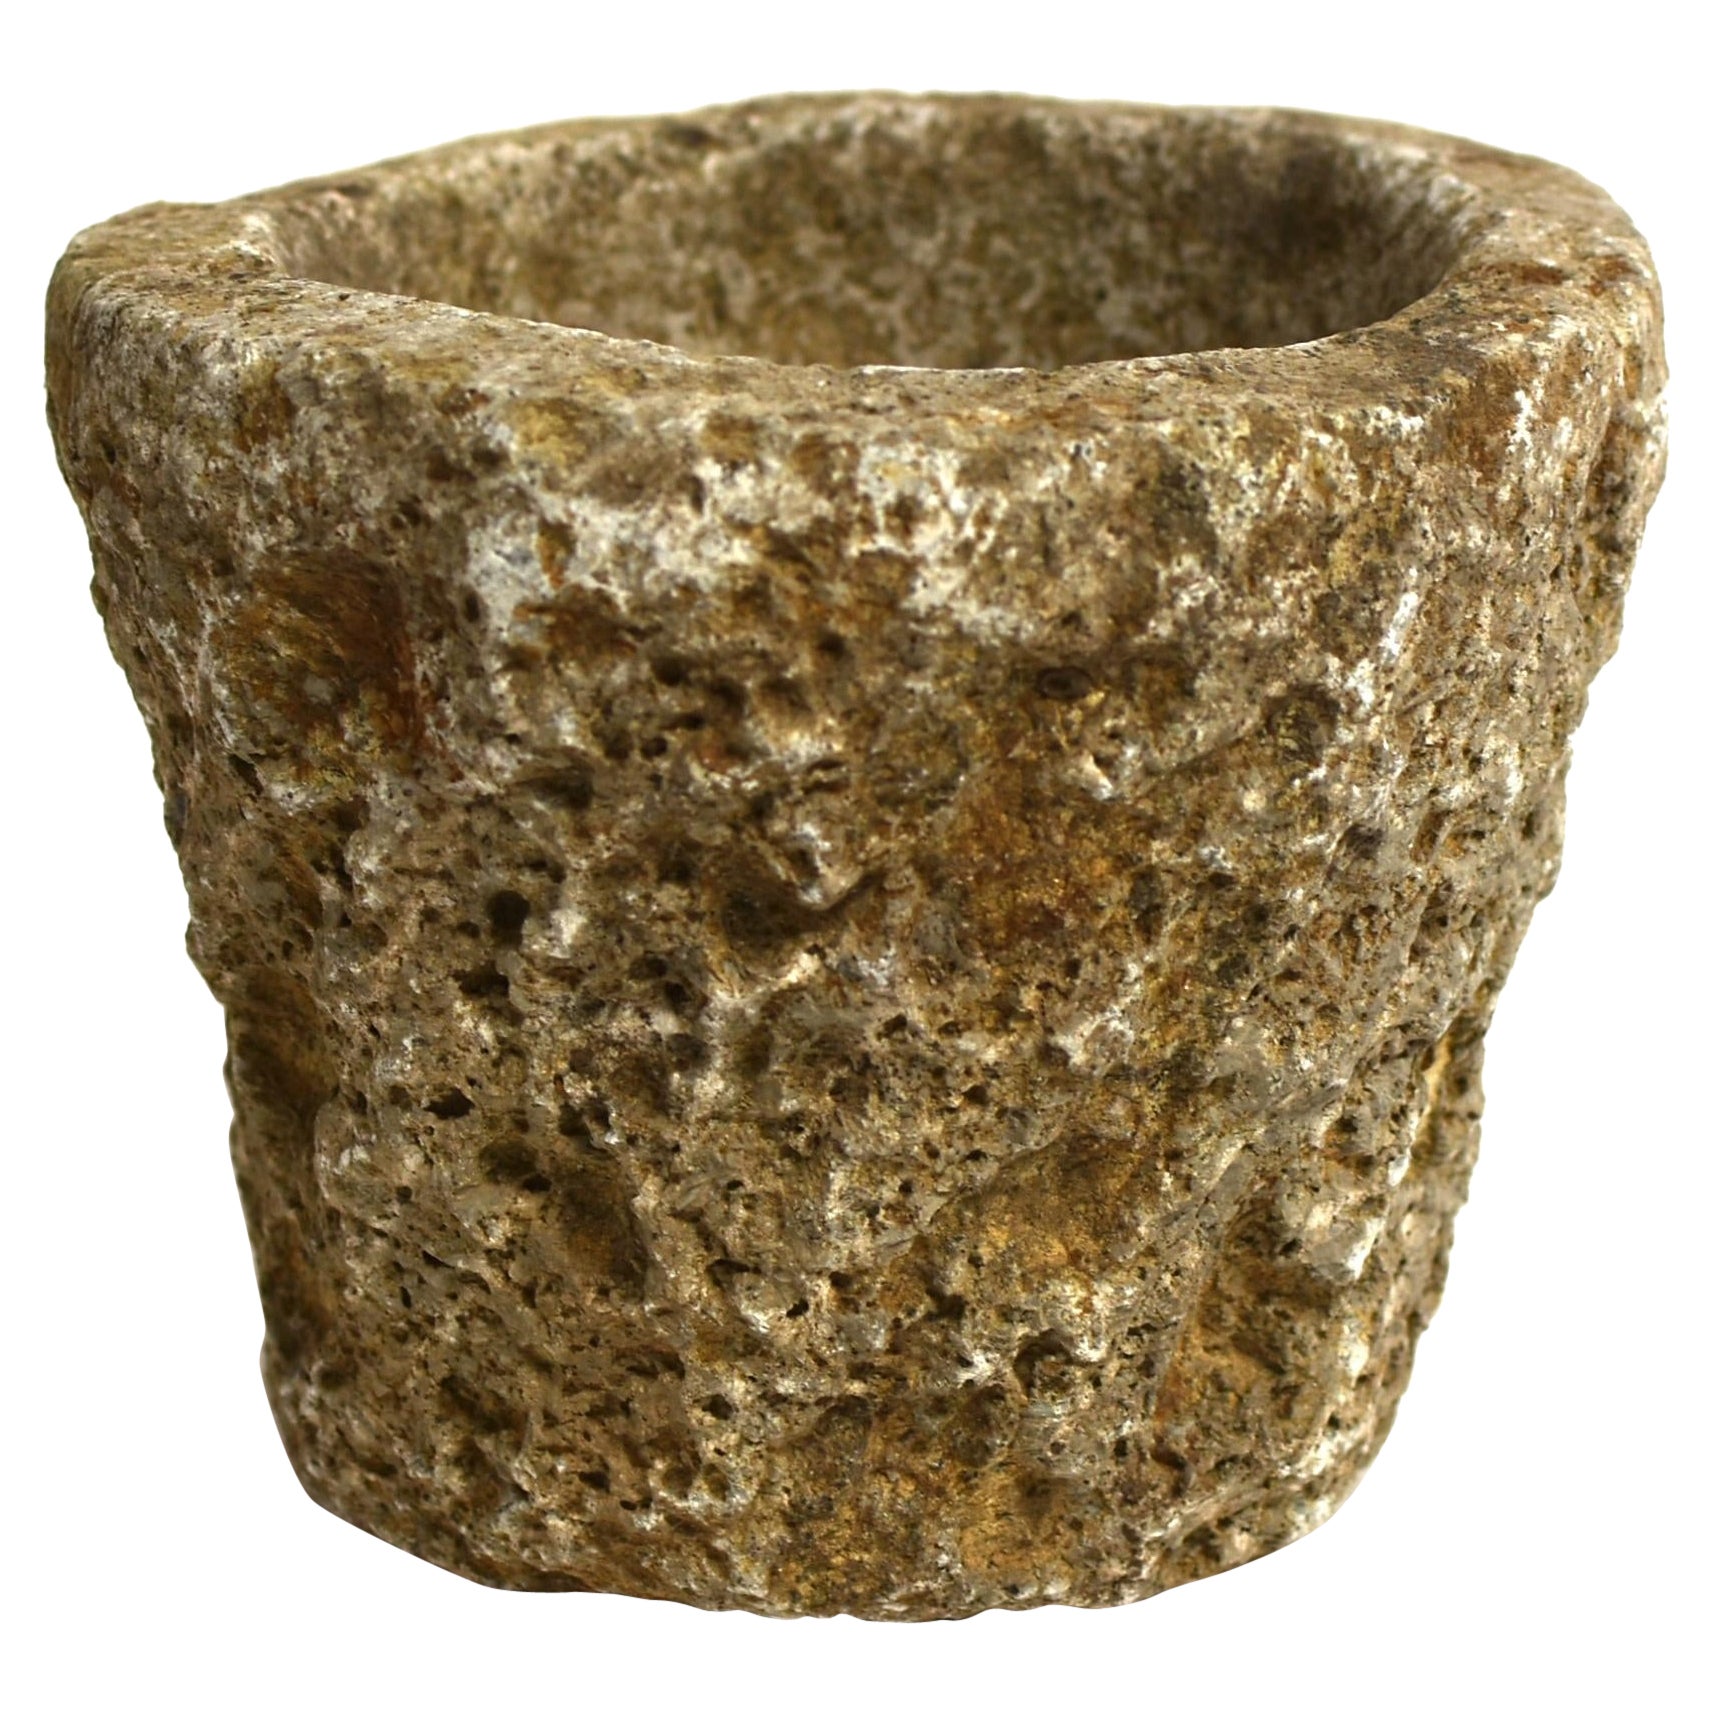 Kalksteinschale-Mortar-Pflanzgefäß aus dem 18. Jahrhundert, 7 lbs im Angebot